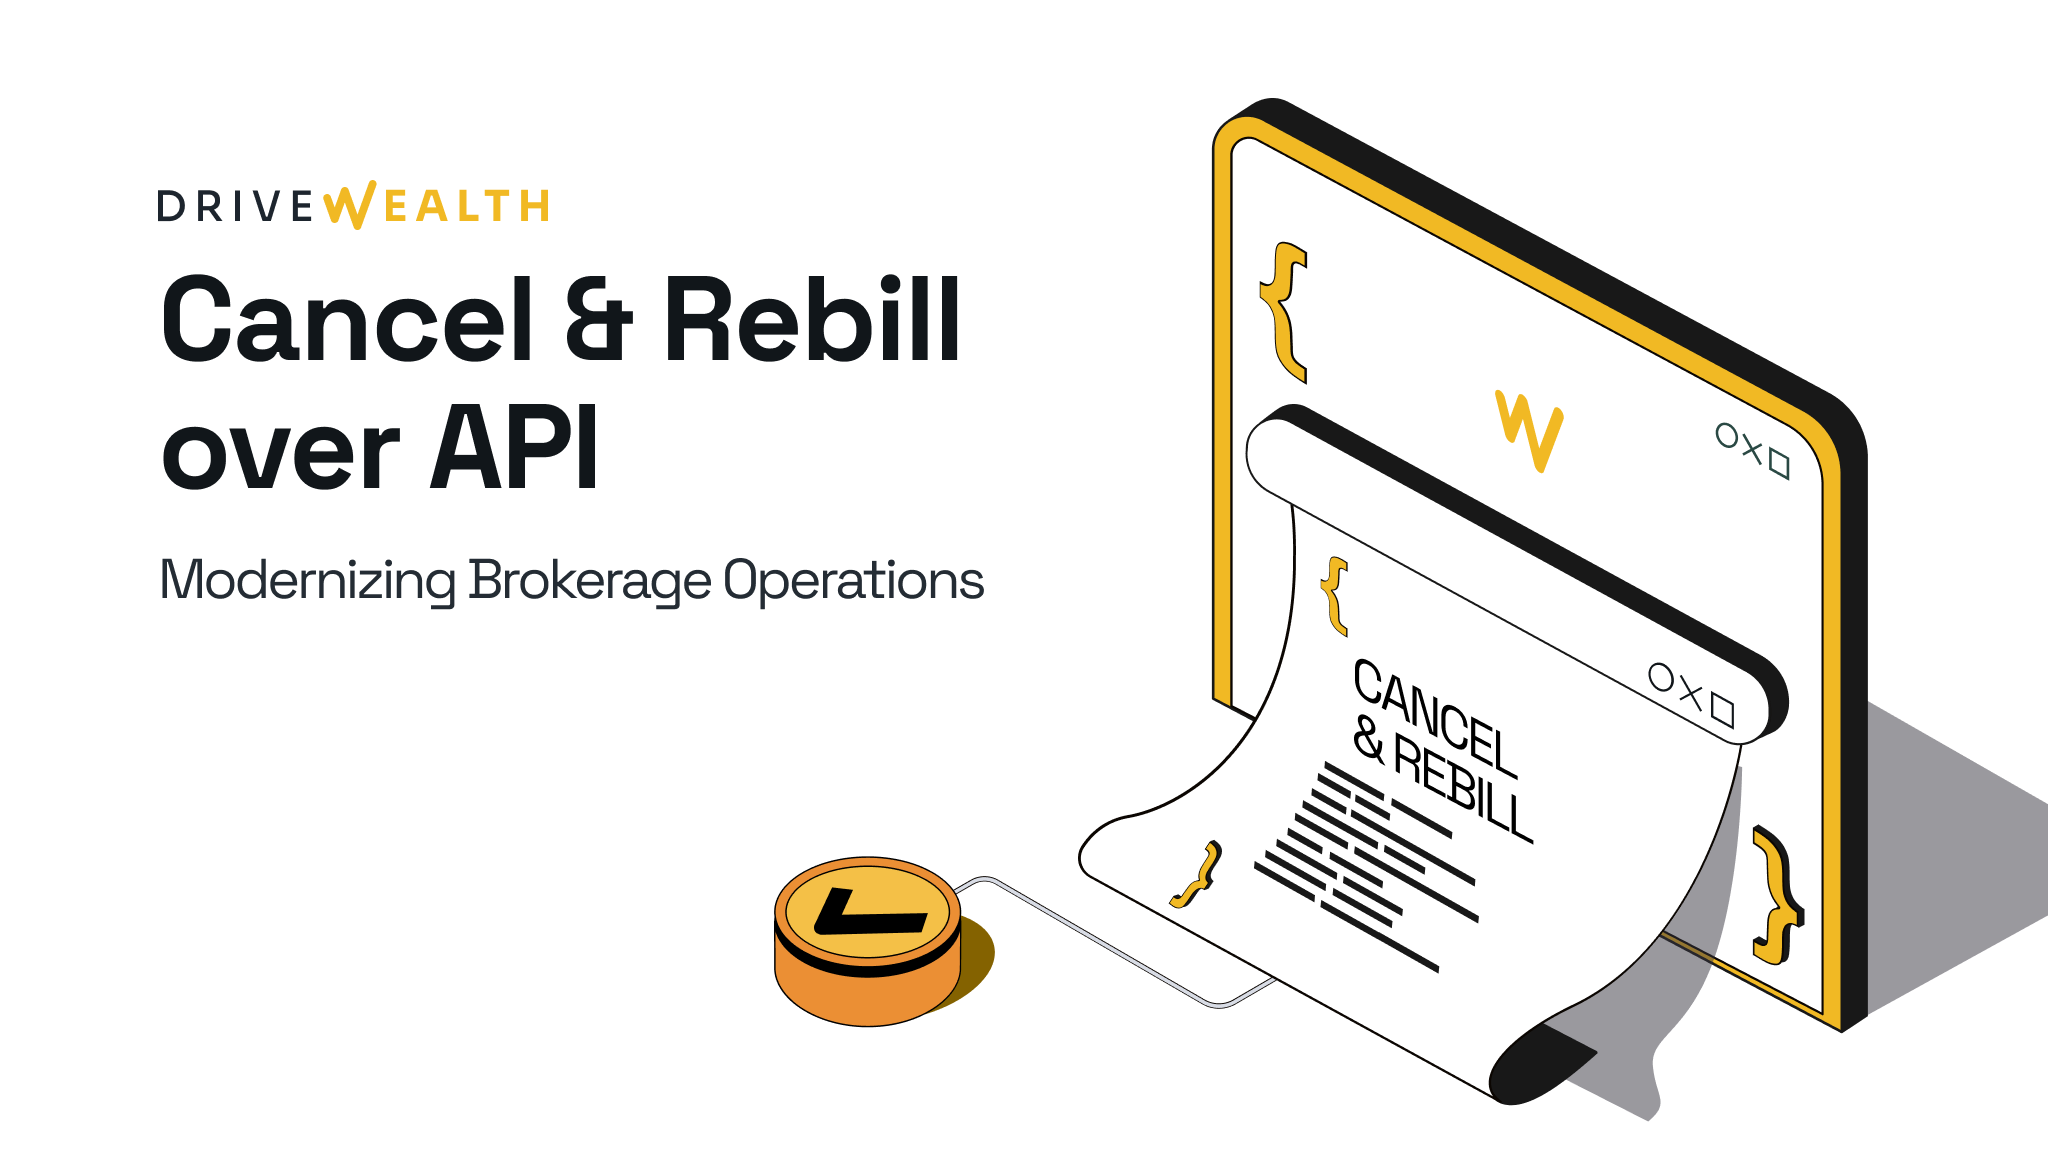 Modernizing Brokerage Operations: Cancel & Rebill over API